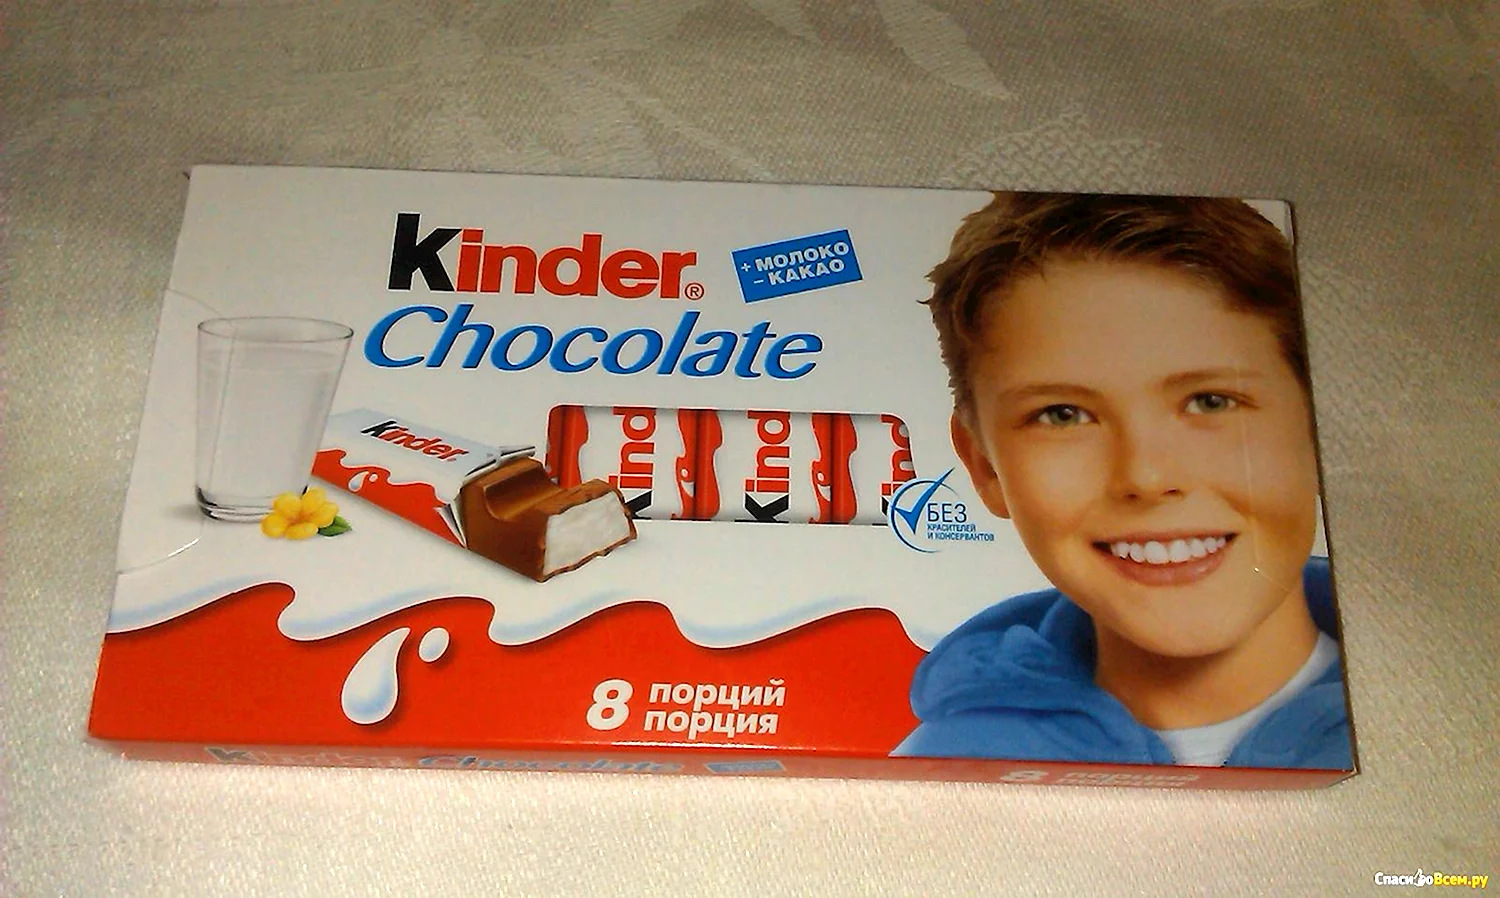 Киндер шоколад. Kinder шоколад. Шоколадка Киндер. Шоколад kinder Chocolate. Киндер 8 порций